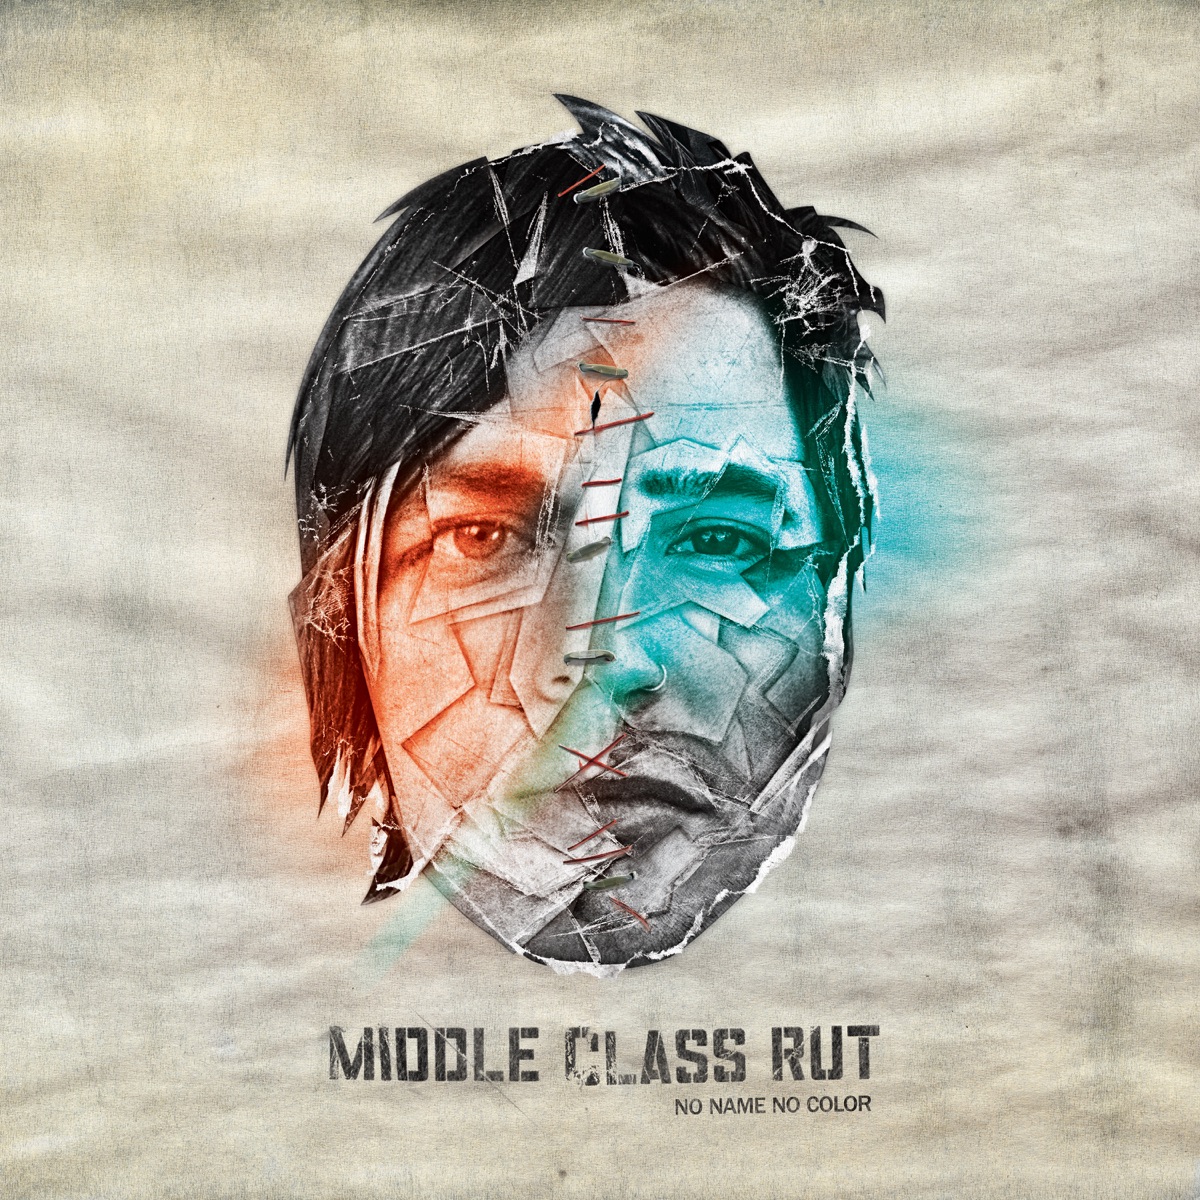 Middle Class Rut No Name No Color cover artwork